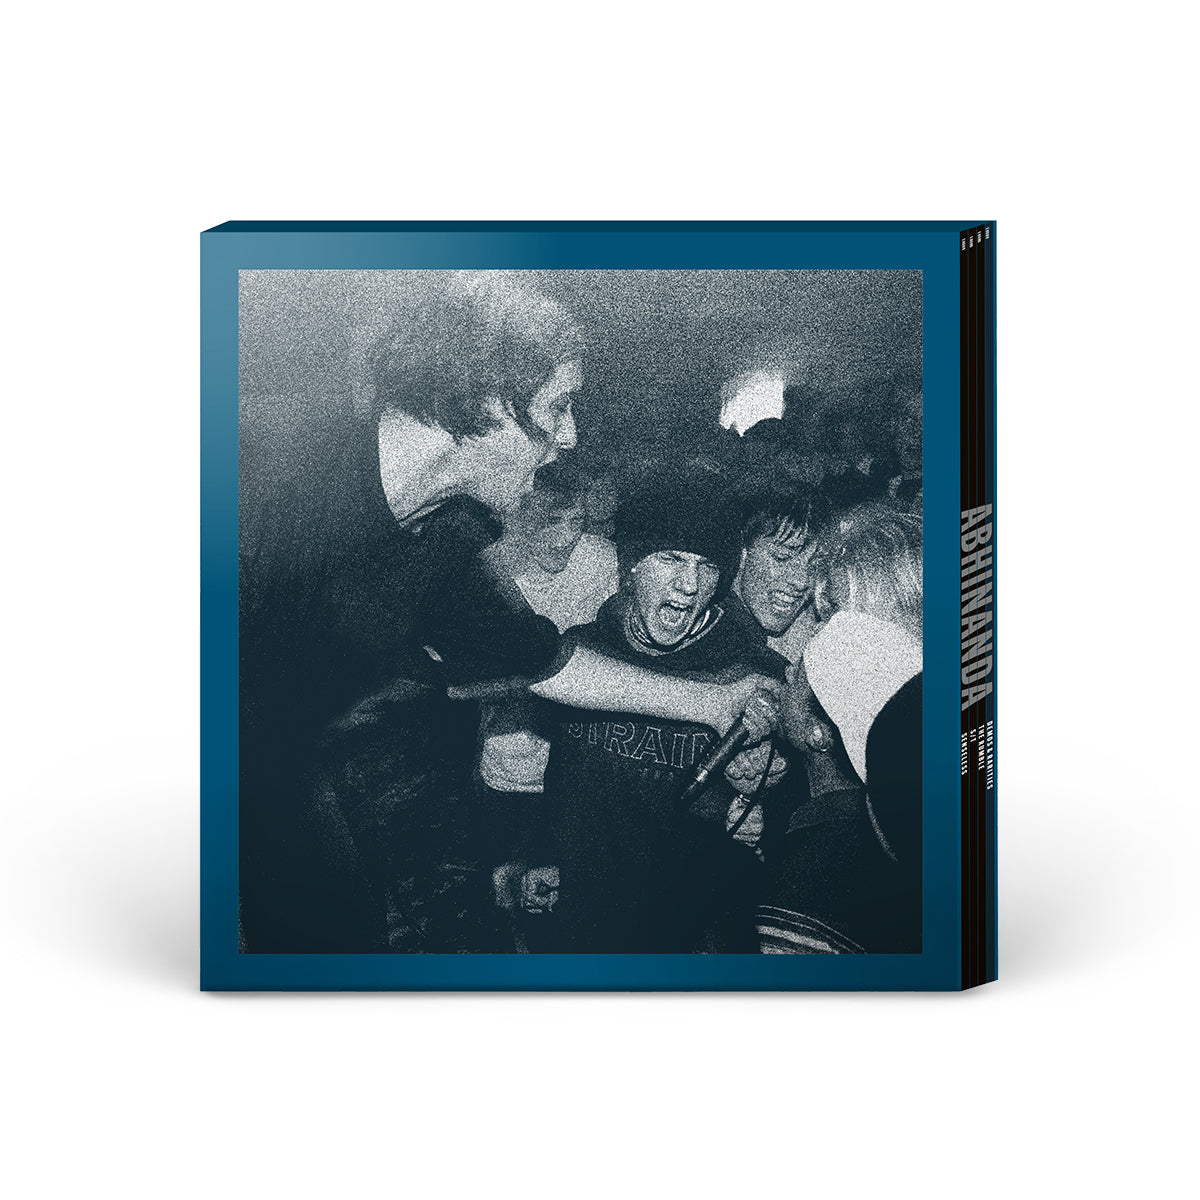 ABHINANDA "Complete Discography" Vinyl Boxset